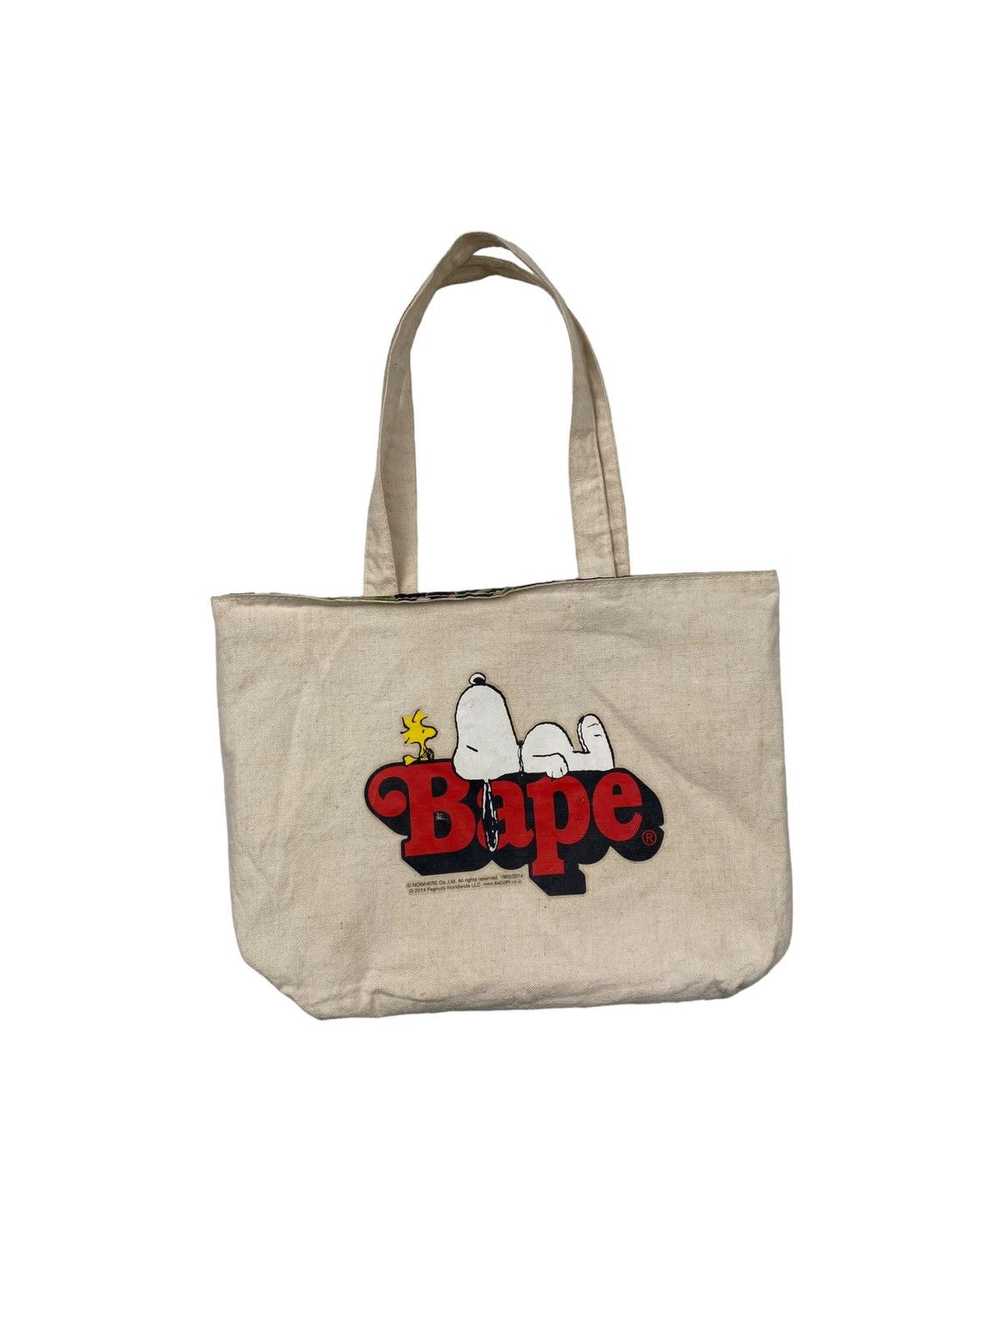 Bape A bathing ape x peanuts Reversible tote bag - image 2